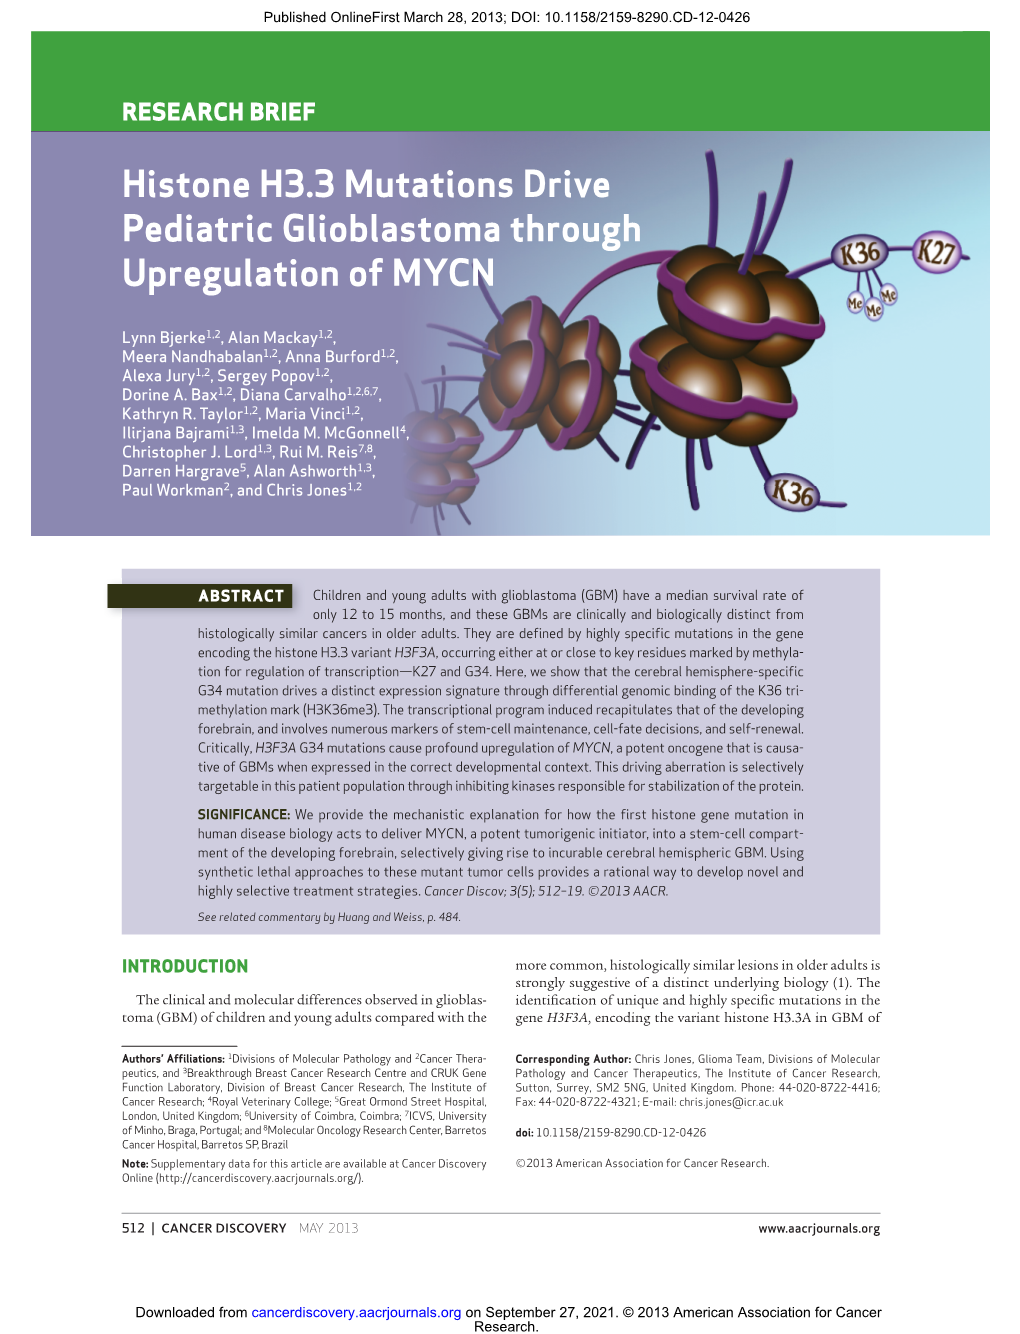 Histone H3.3 Mutations Drive Pediatric Glioblastoma Through Upregulation of MYCN